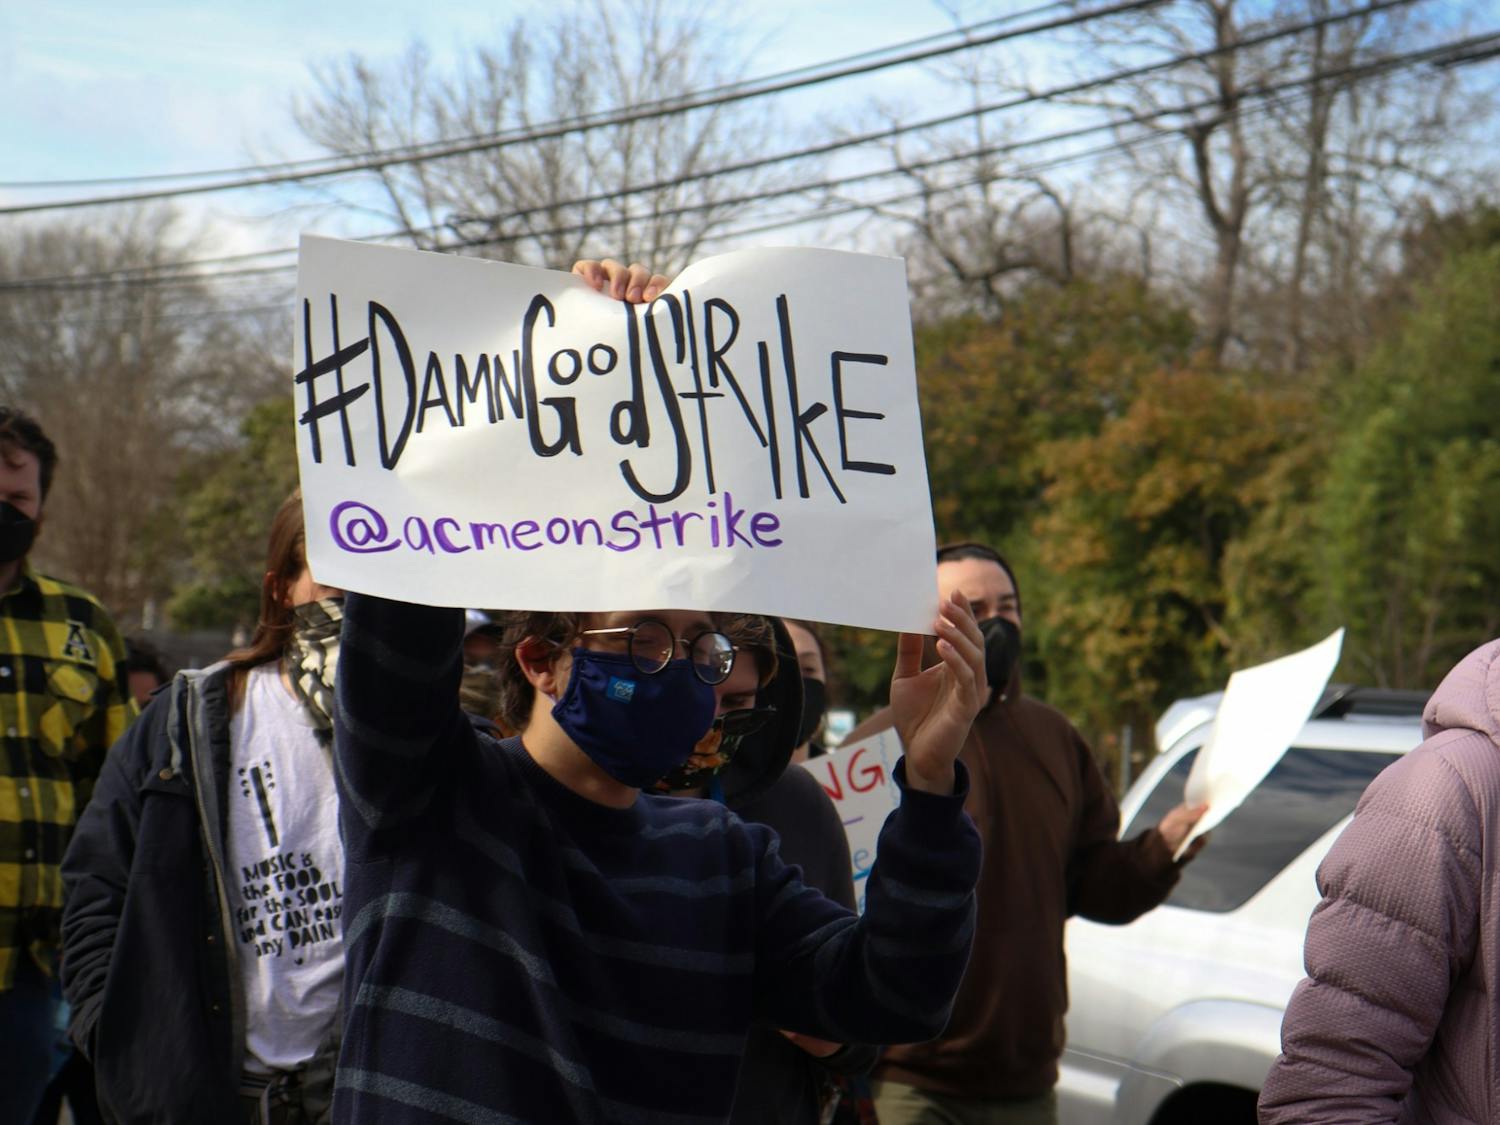 #DamnGoodStrike was the slogan for the strike against ACME on Sunday, Jan. 9, 2022.